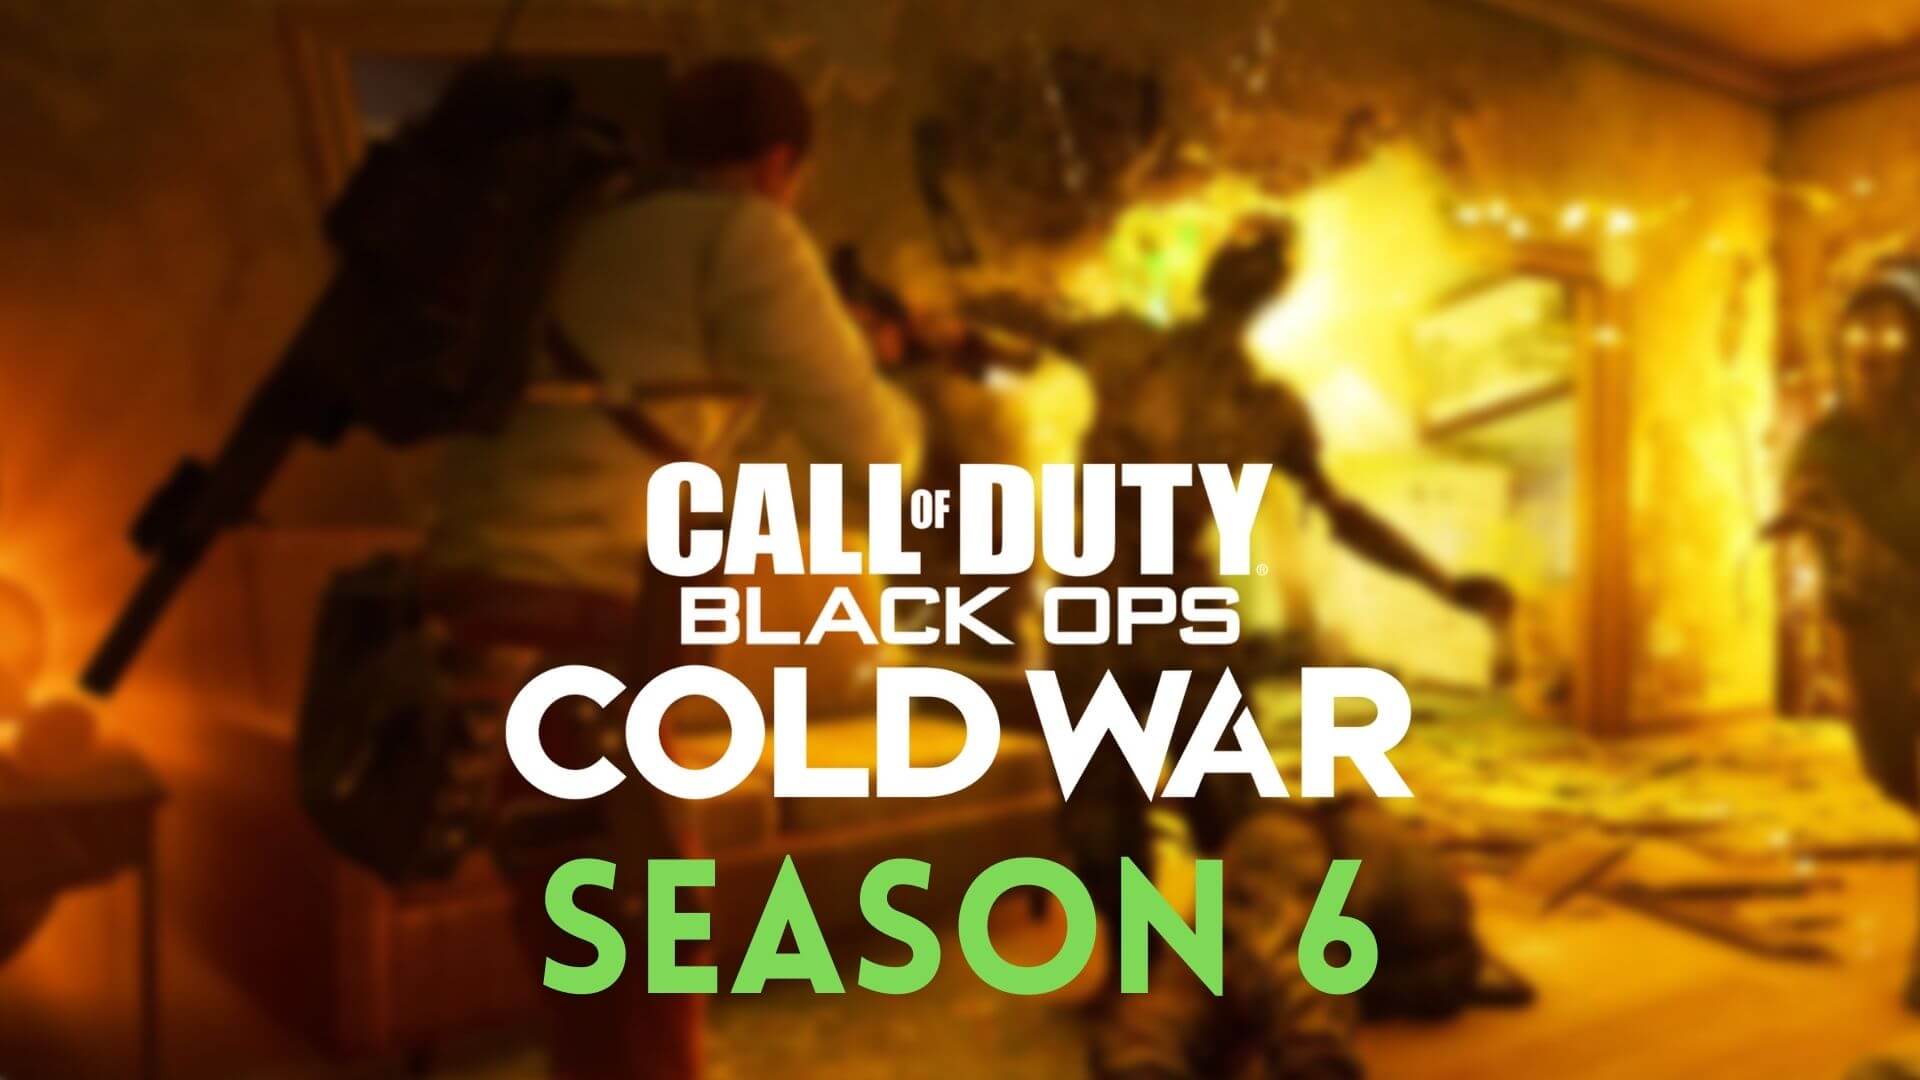 Black Ops Cold War season 6